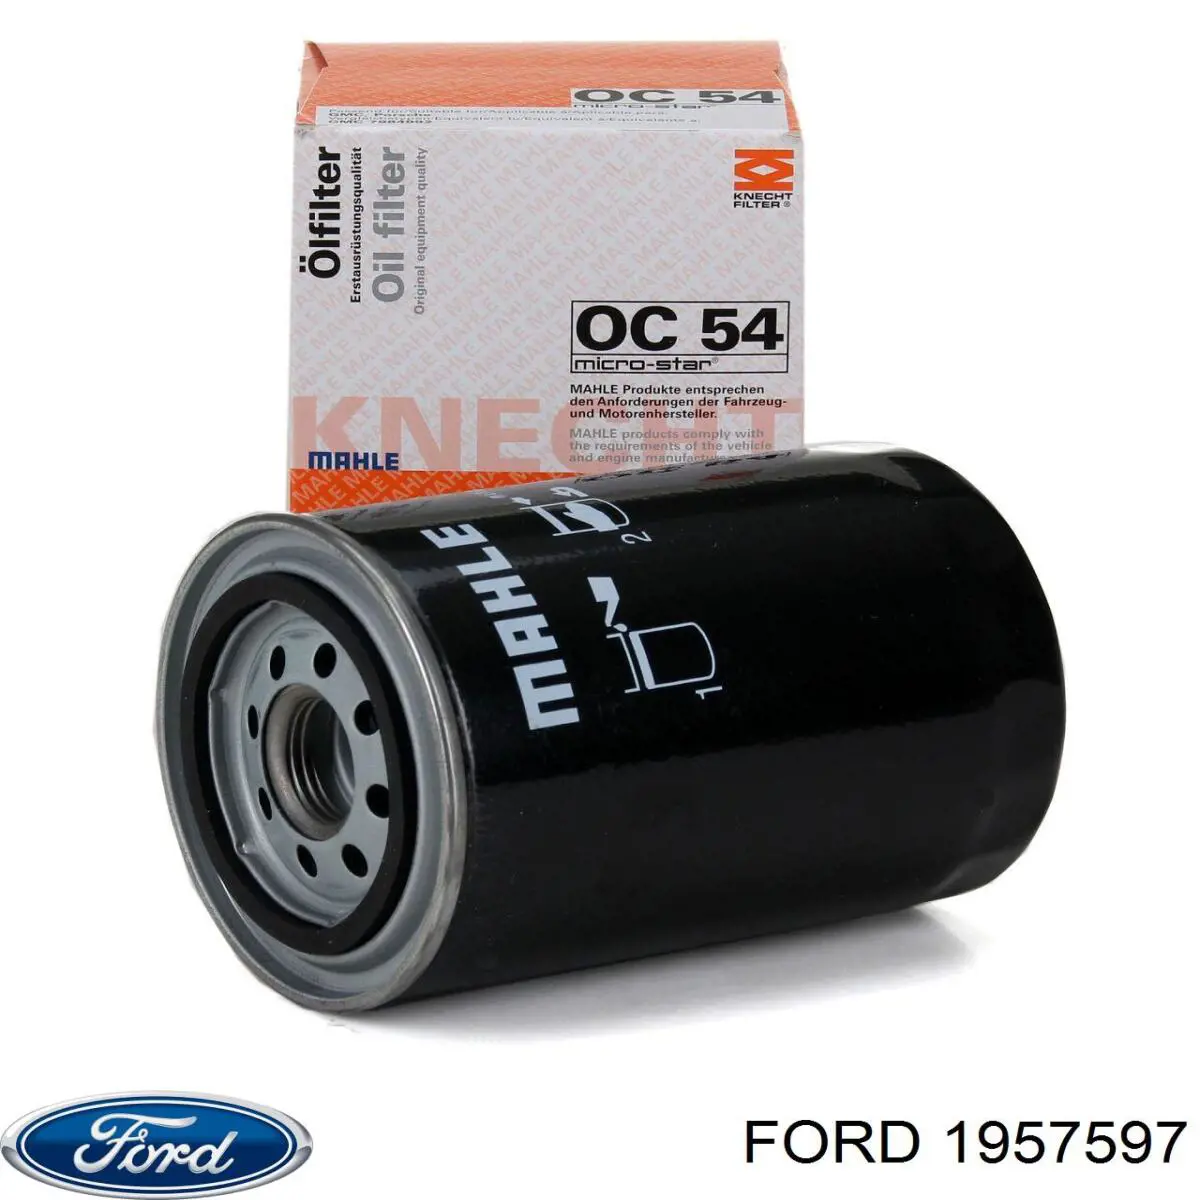 1960830 Ford filtro de aceite